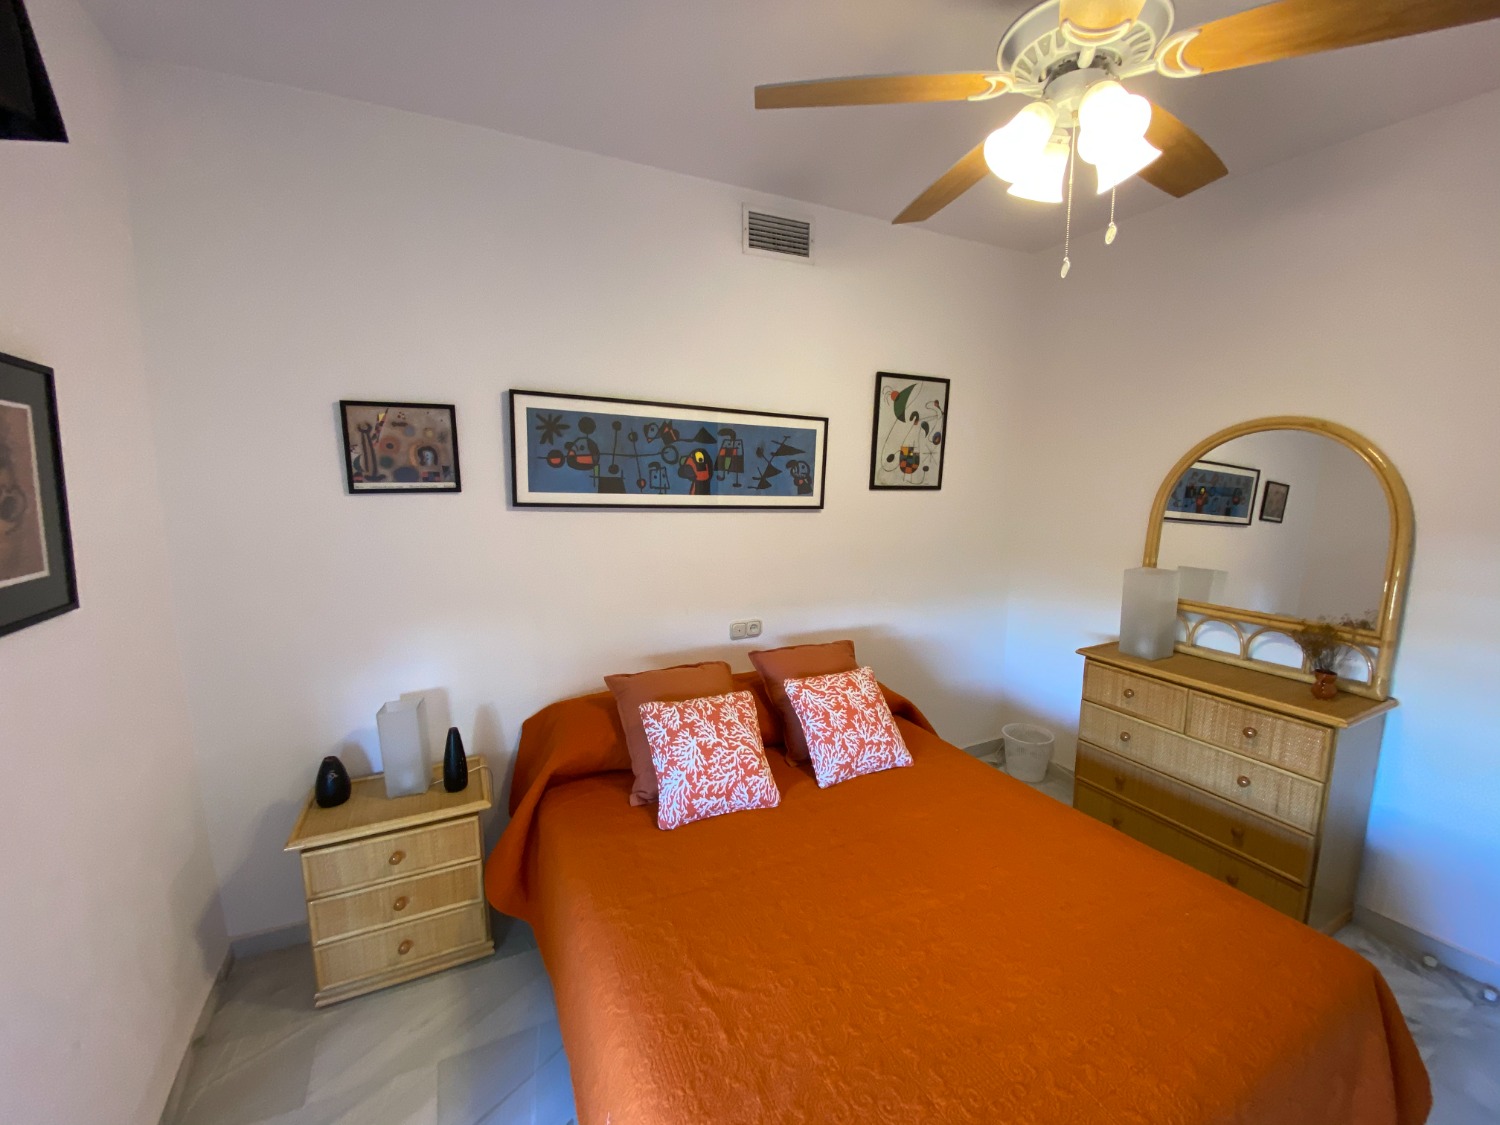 It is your beach house, in Fuengirola, 3 bedrooms, wifi, A/C, enjoy it.